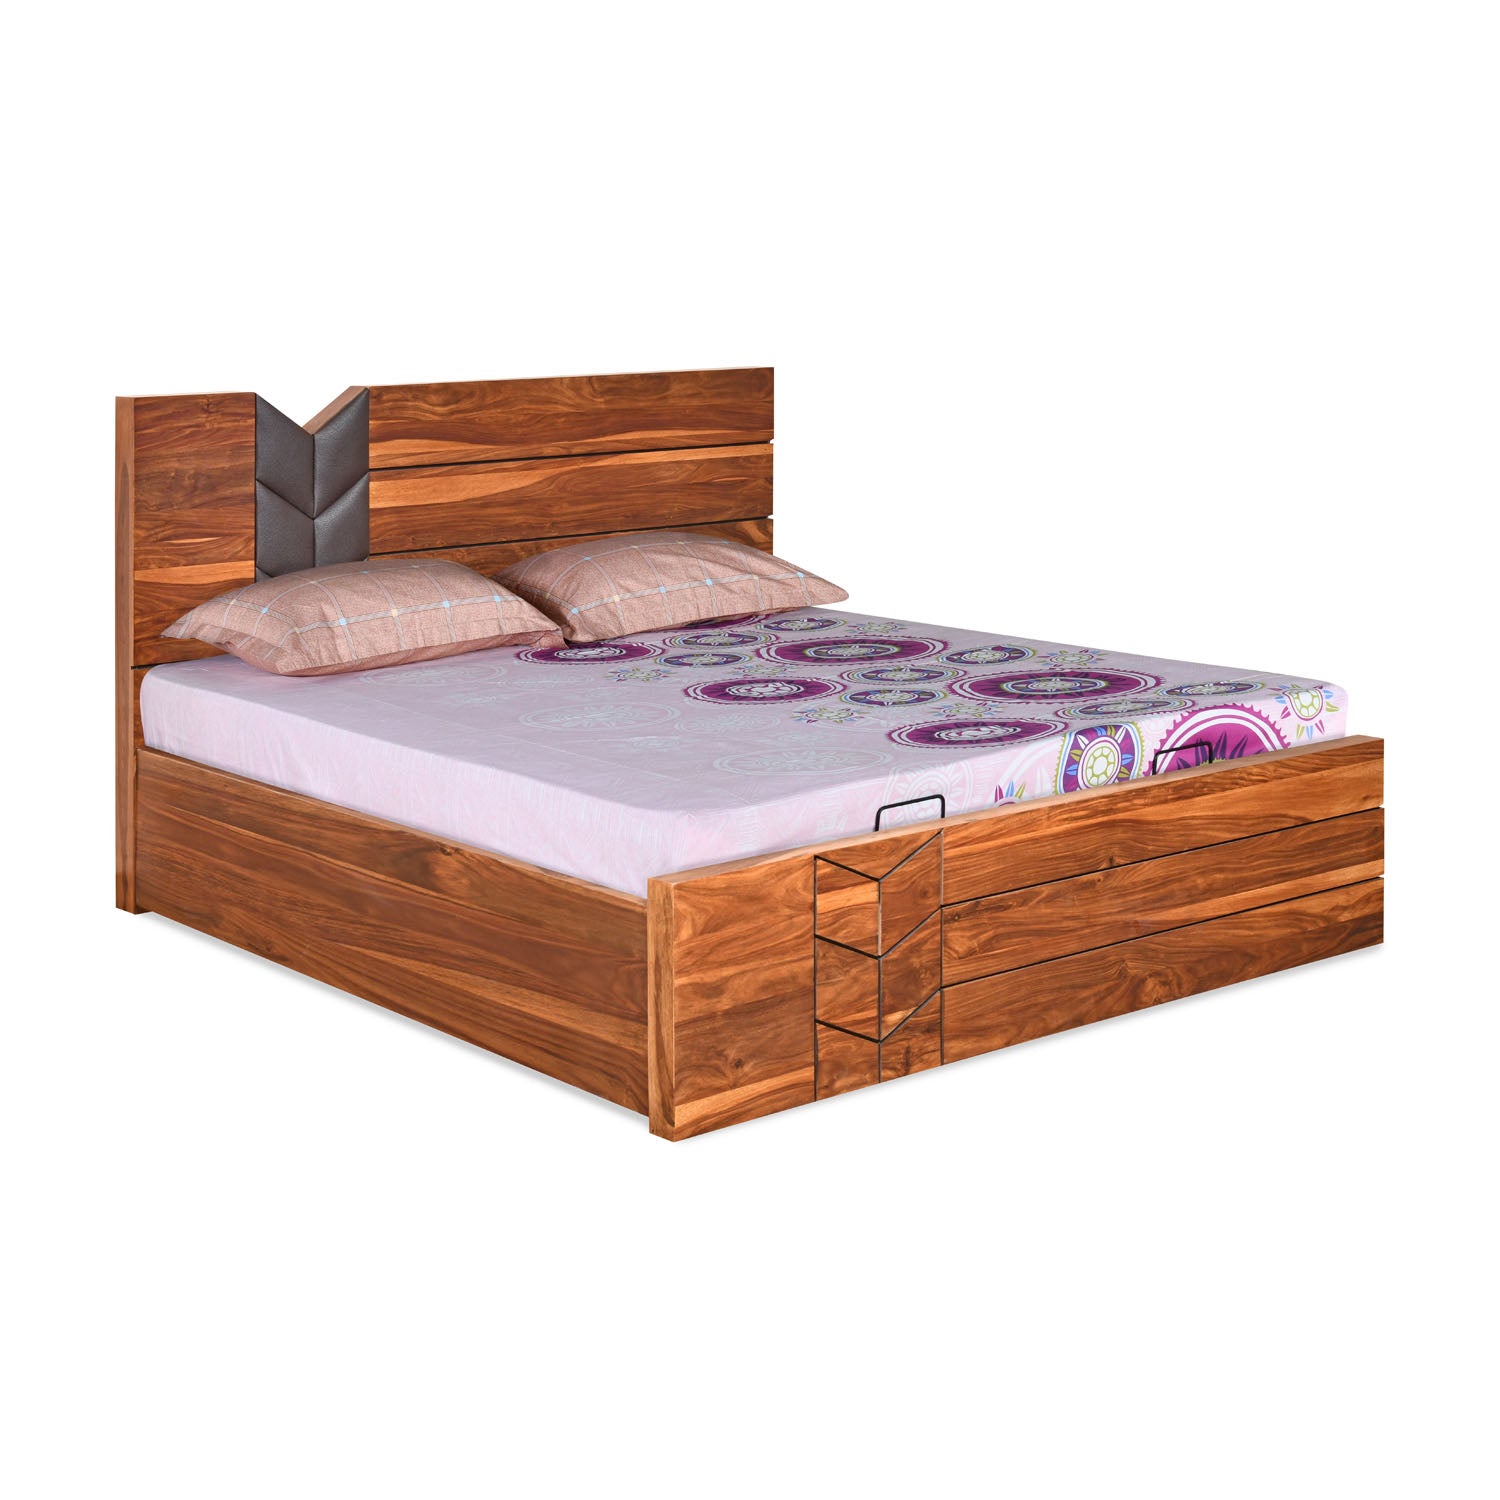 Ankara Queen Bed With Hydraulic Storage (Walnut)